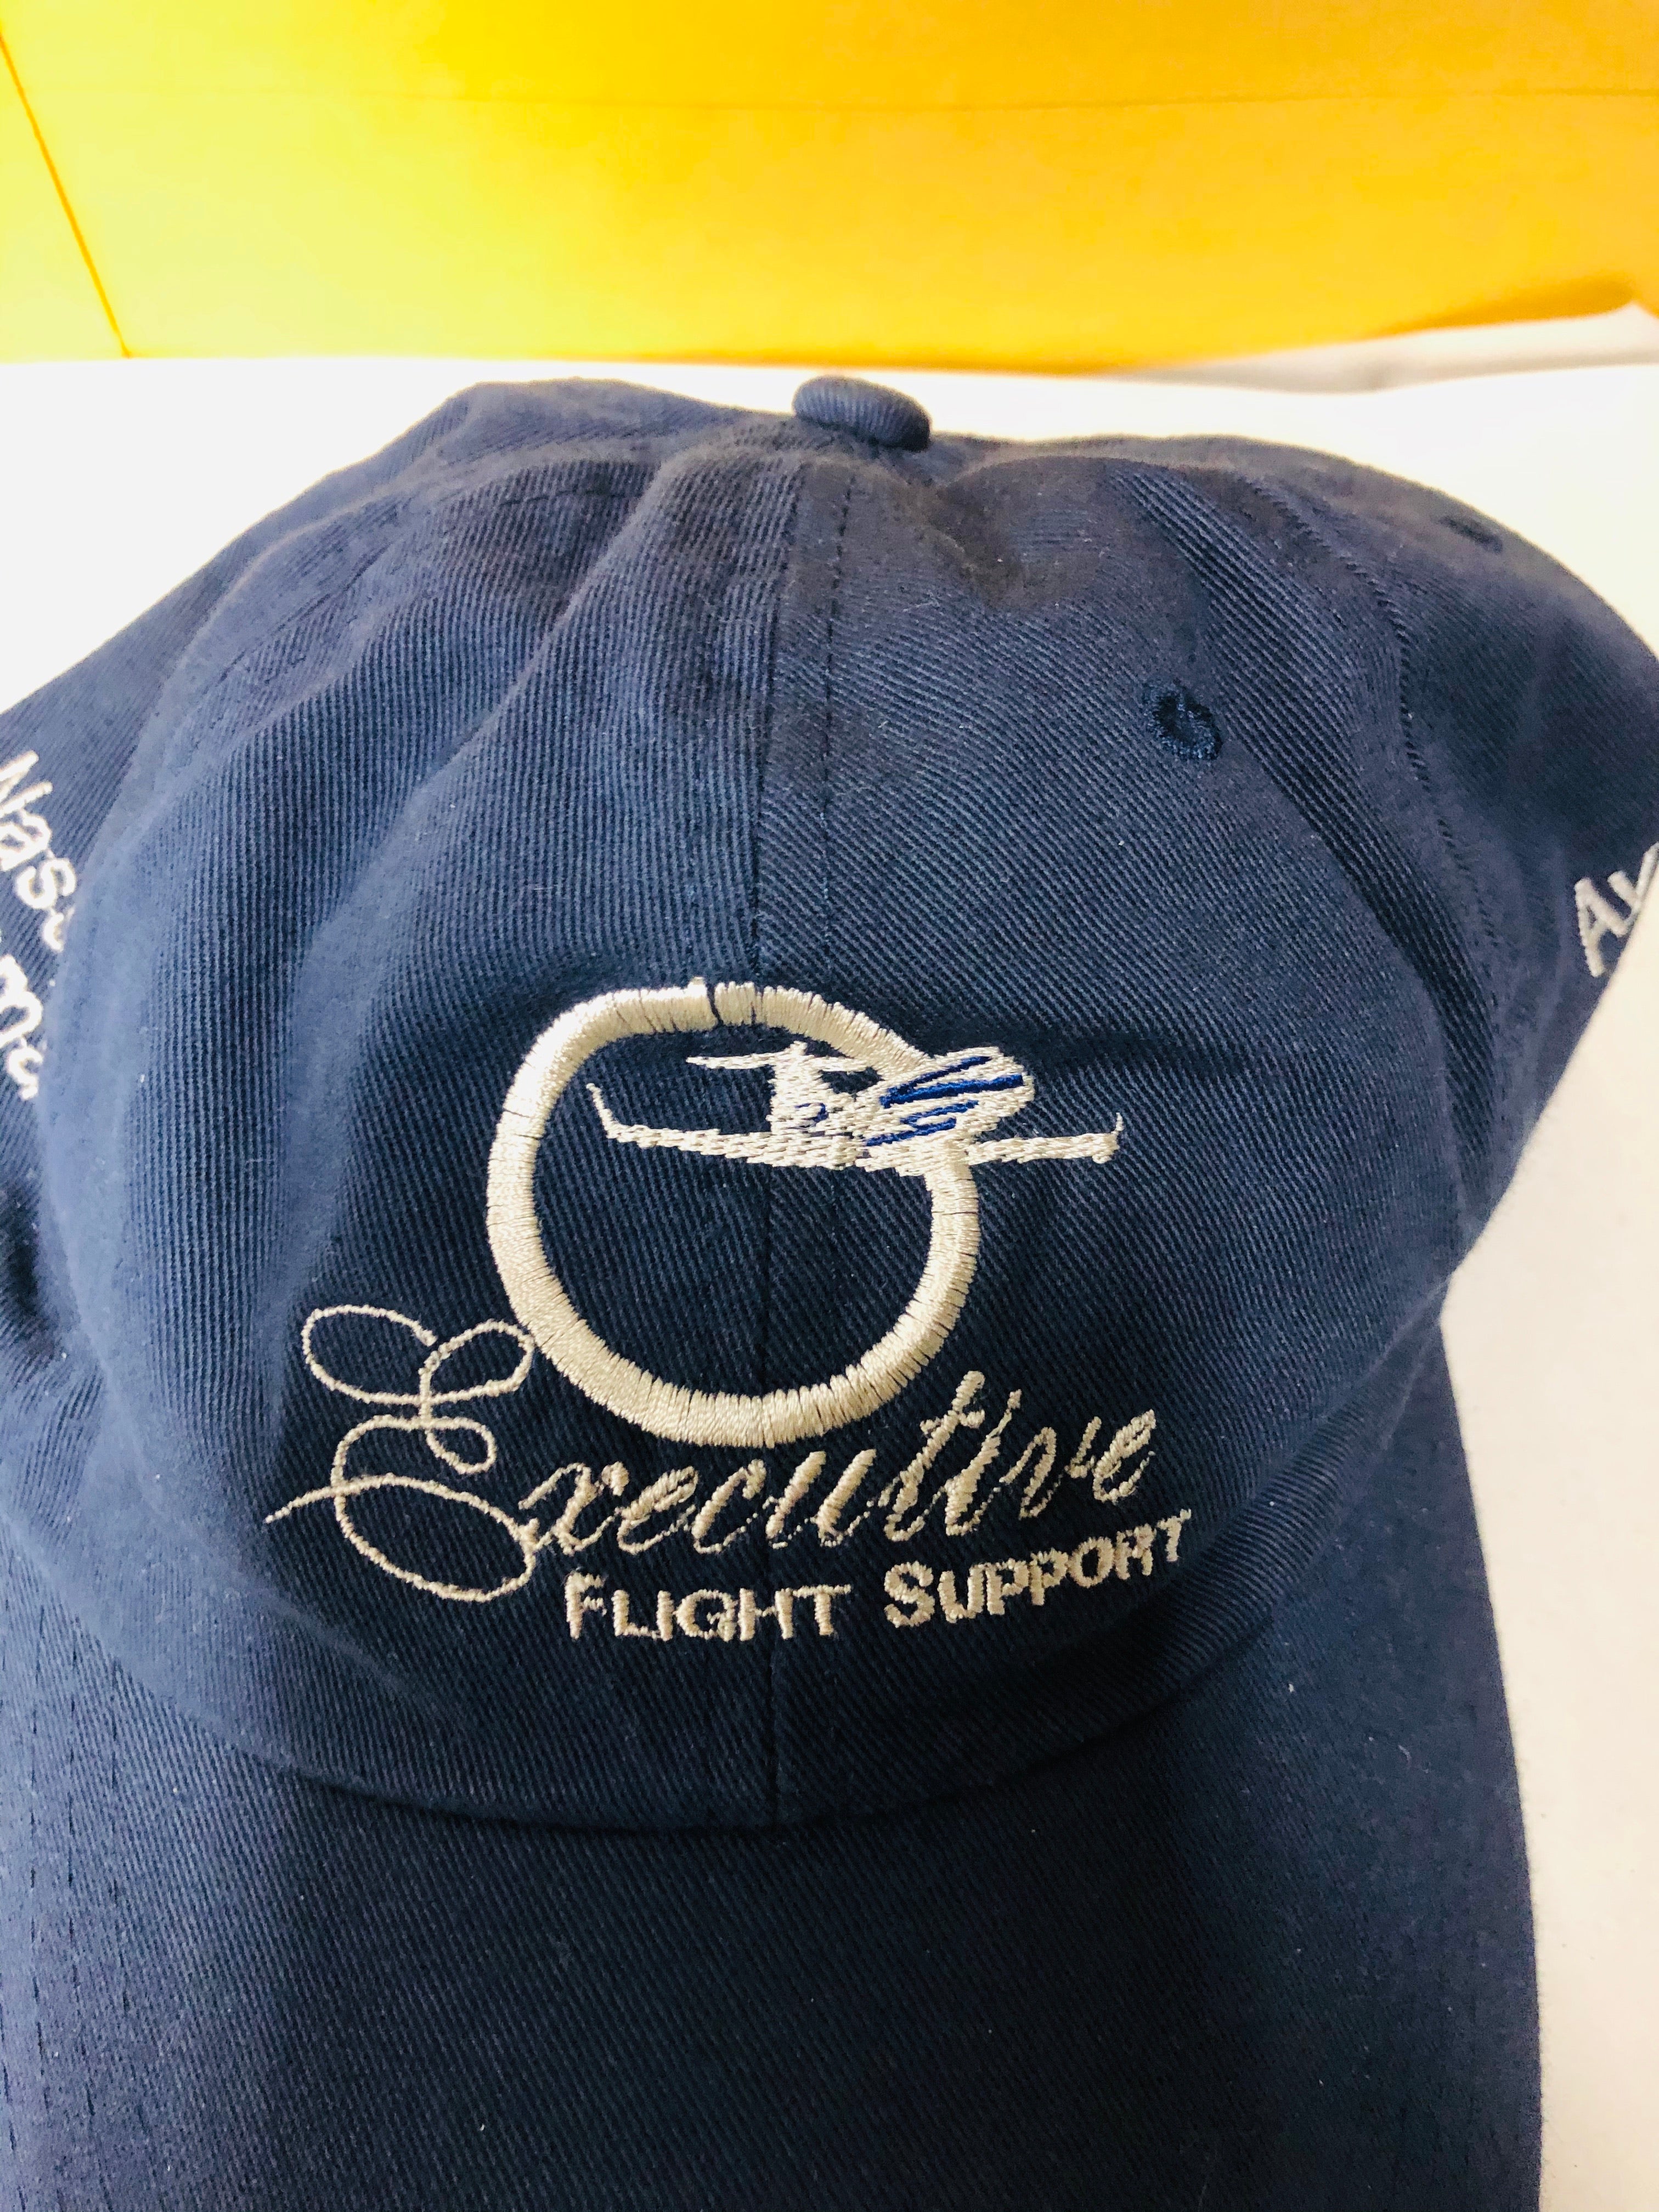 Private jet executive Flight support rare baseball hat